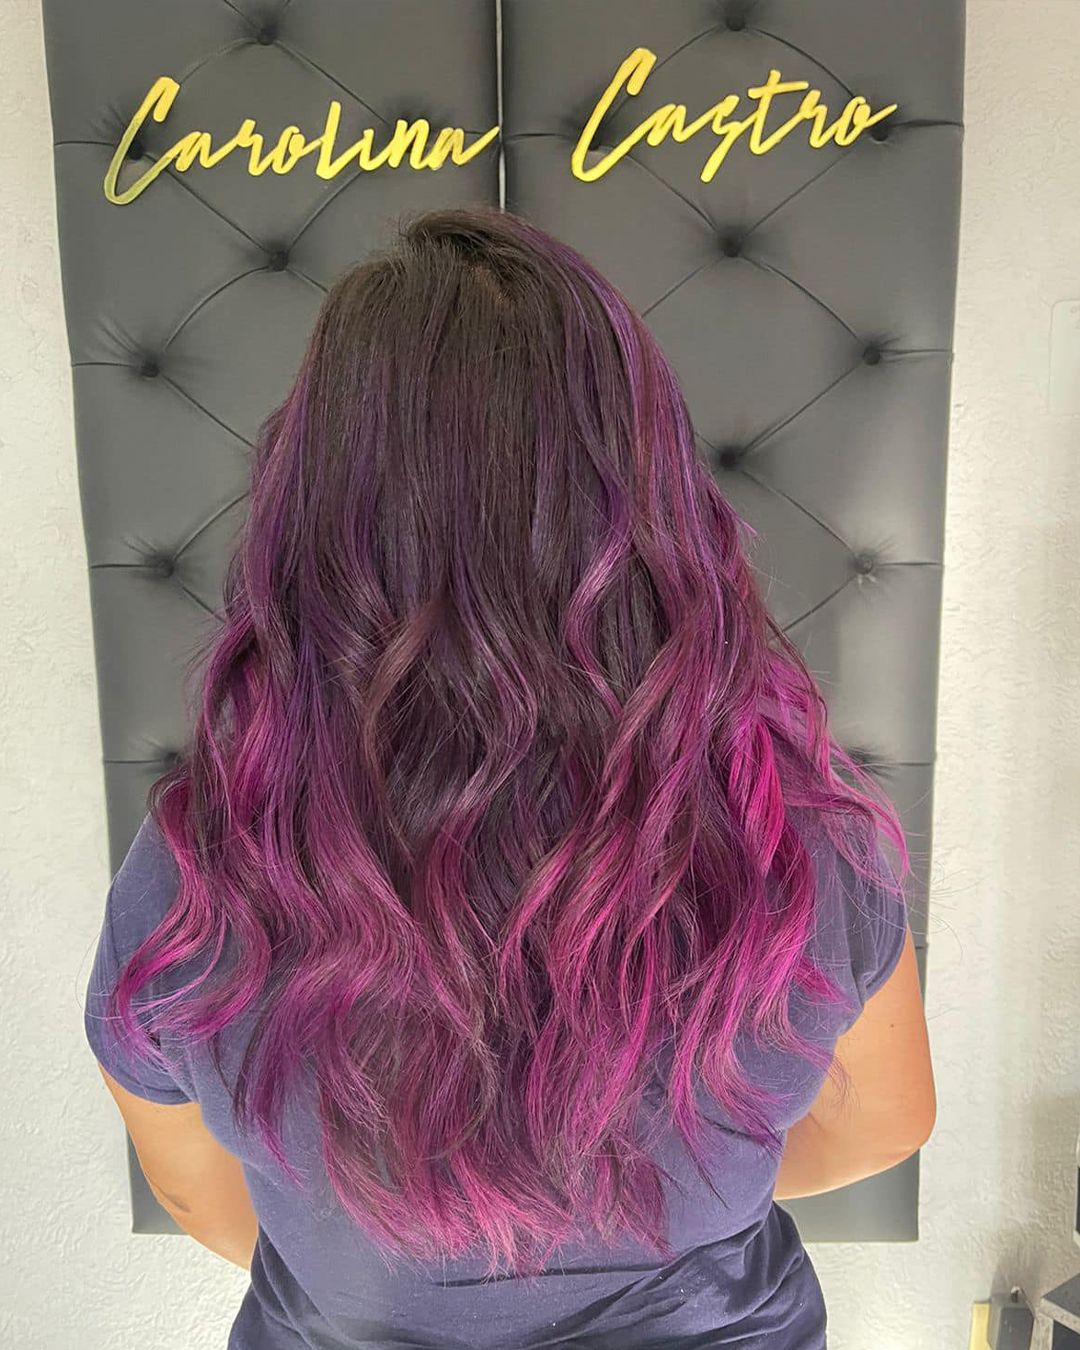 Images Carolina Castro Hair Artist